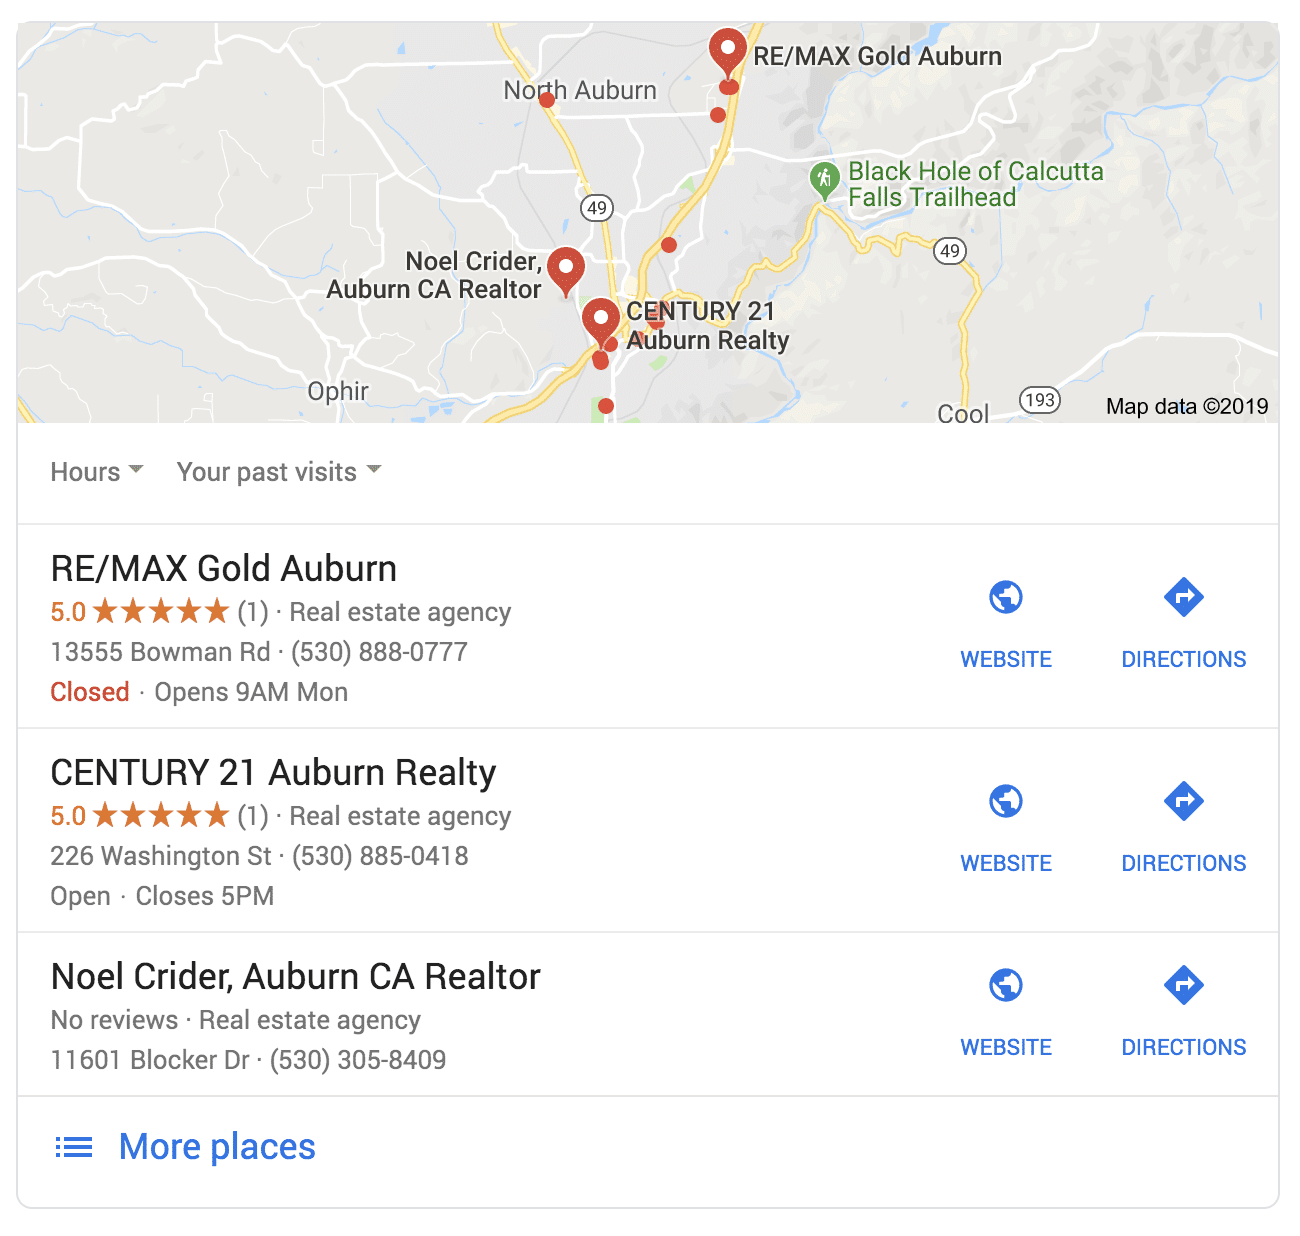 Google map pack